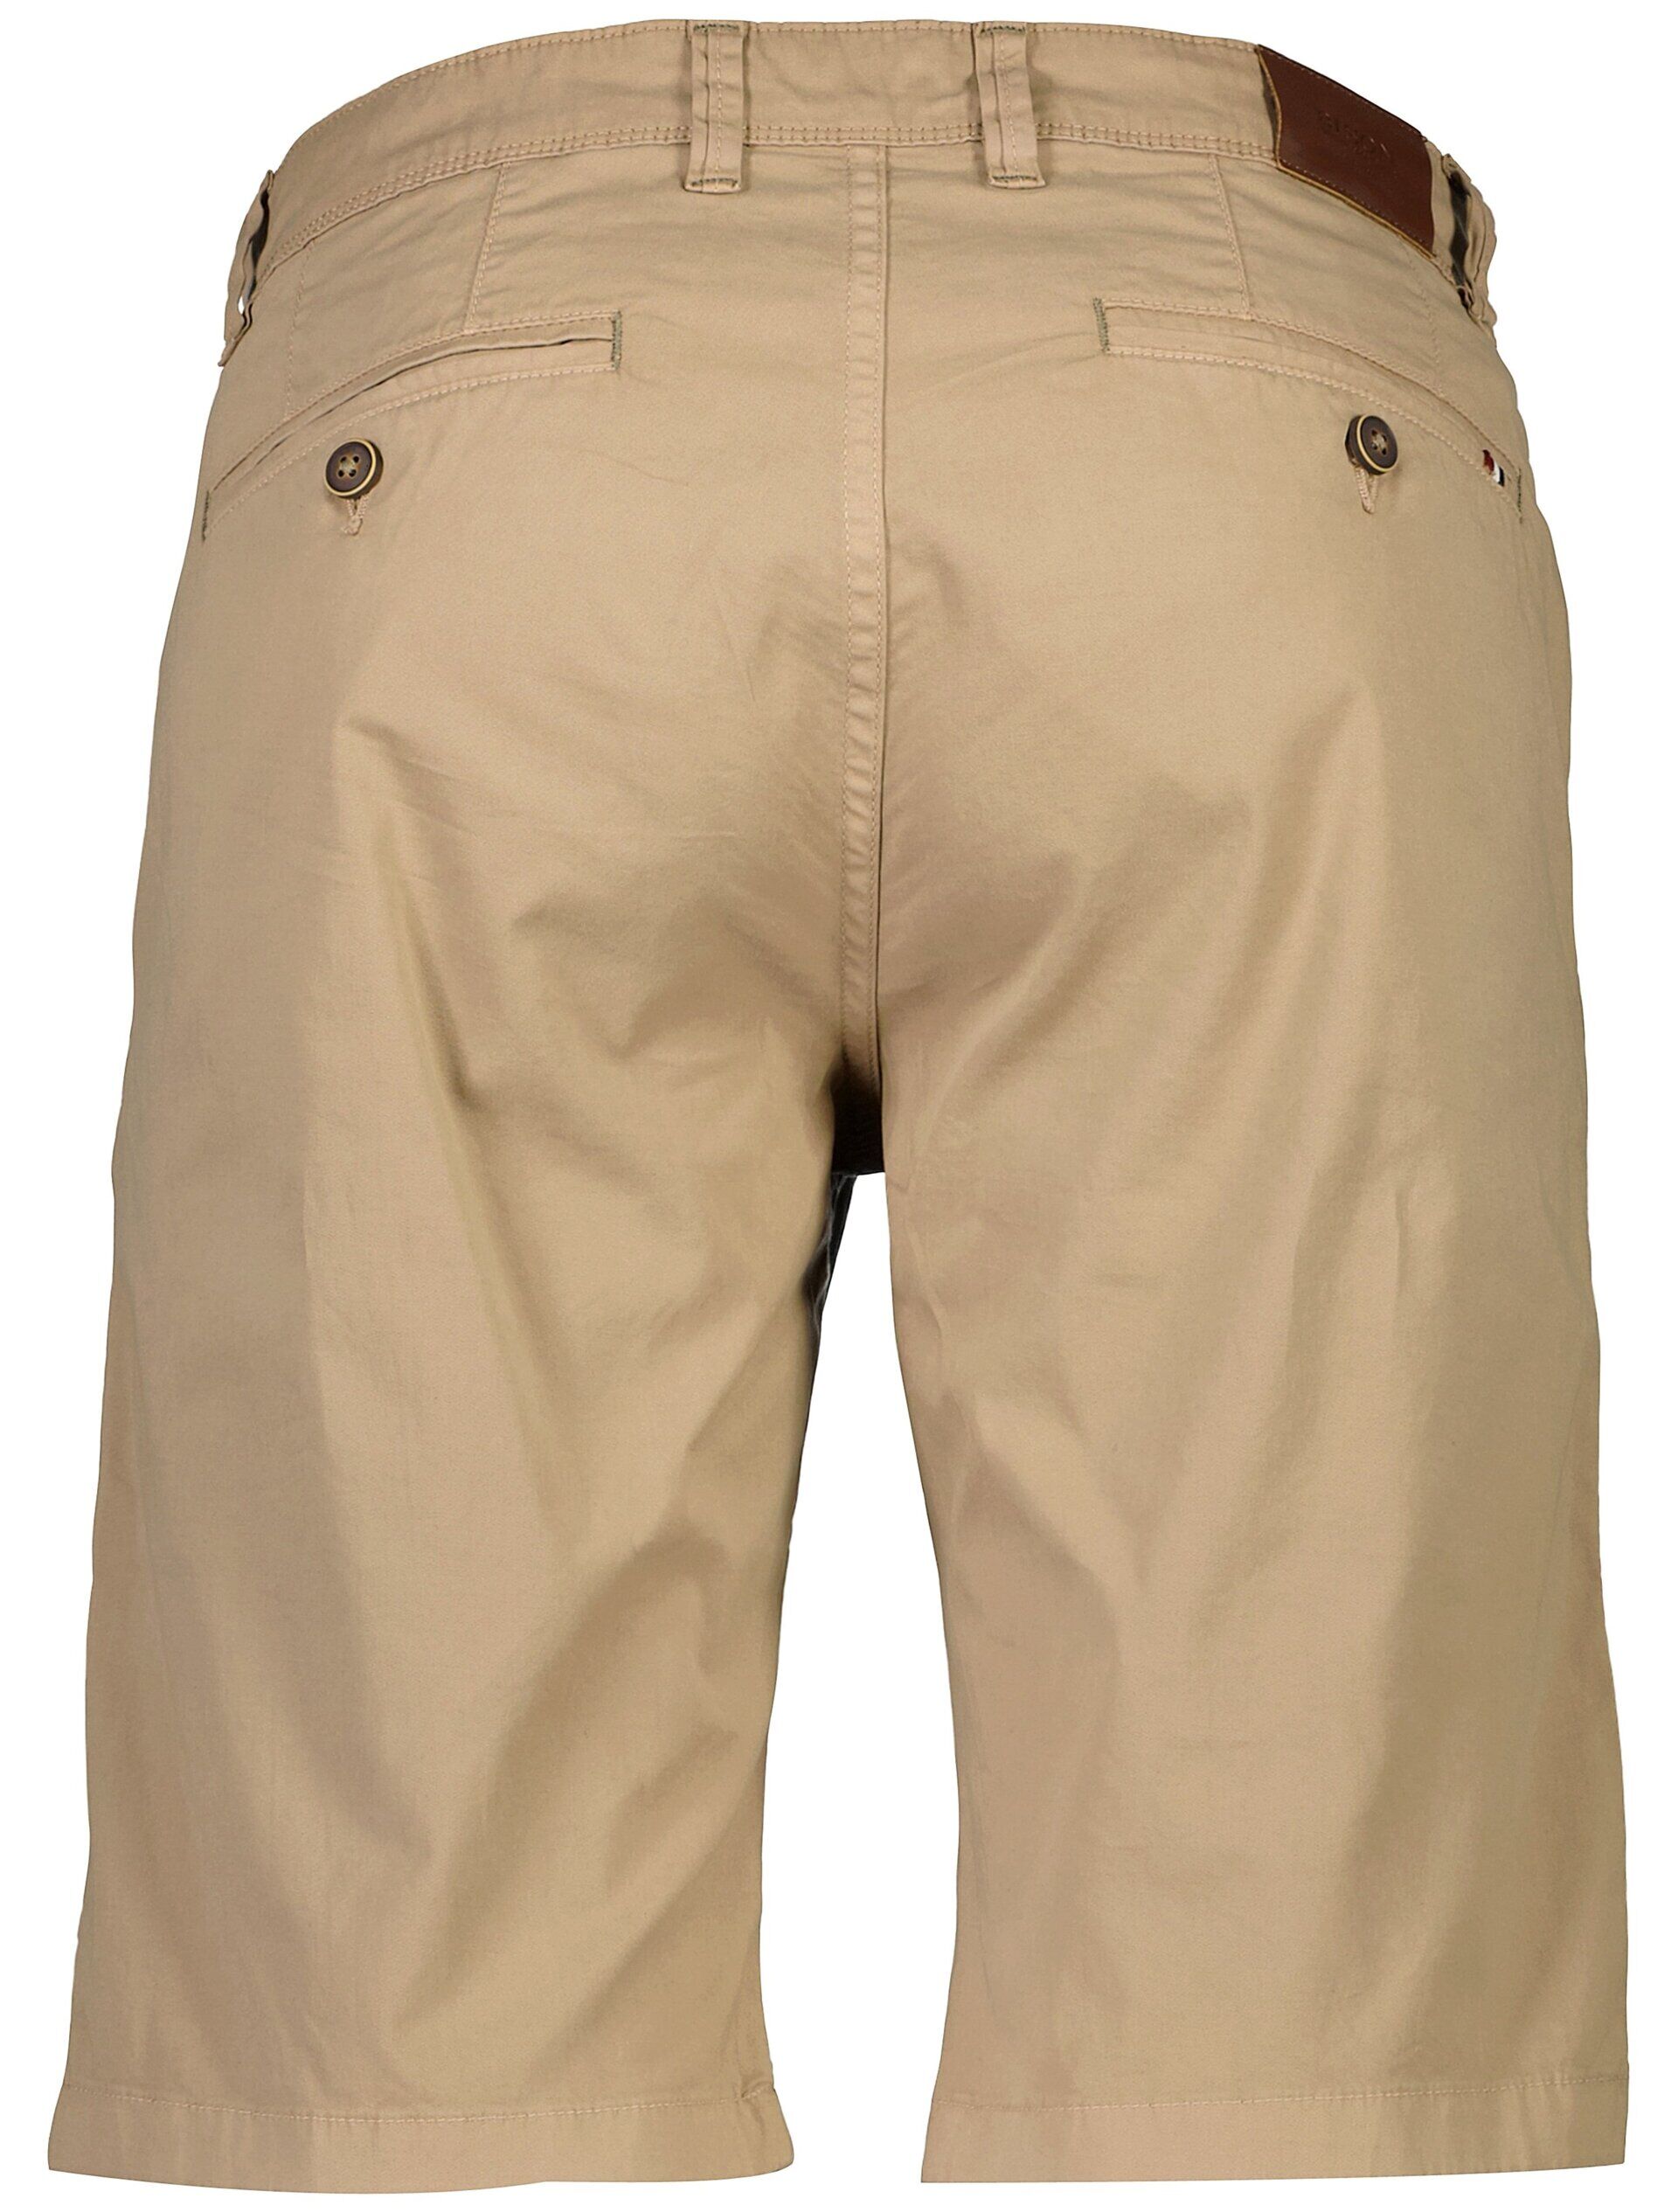 Bison  Chino shorts 80-512013